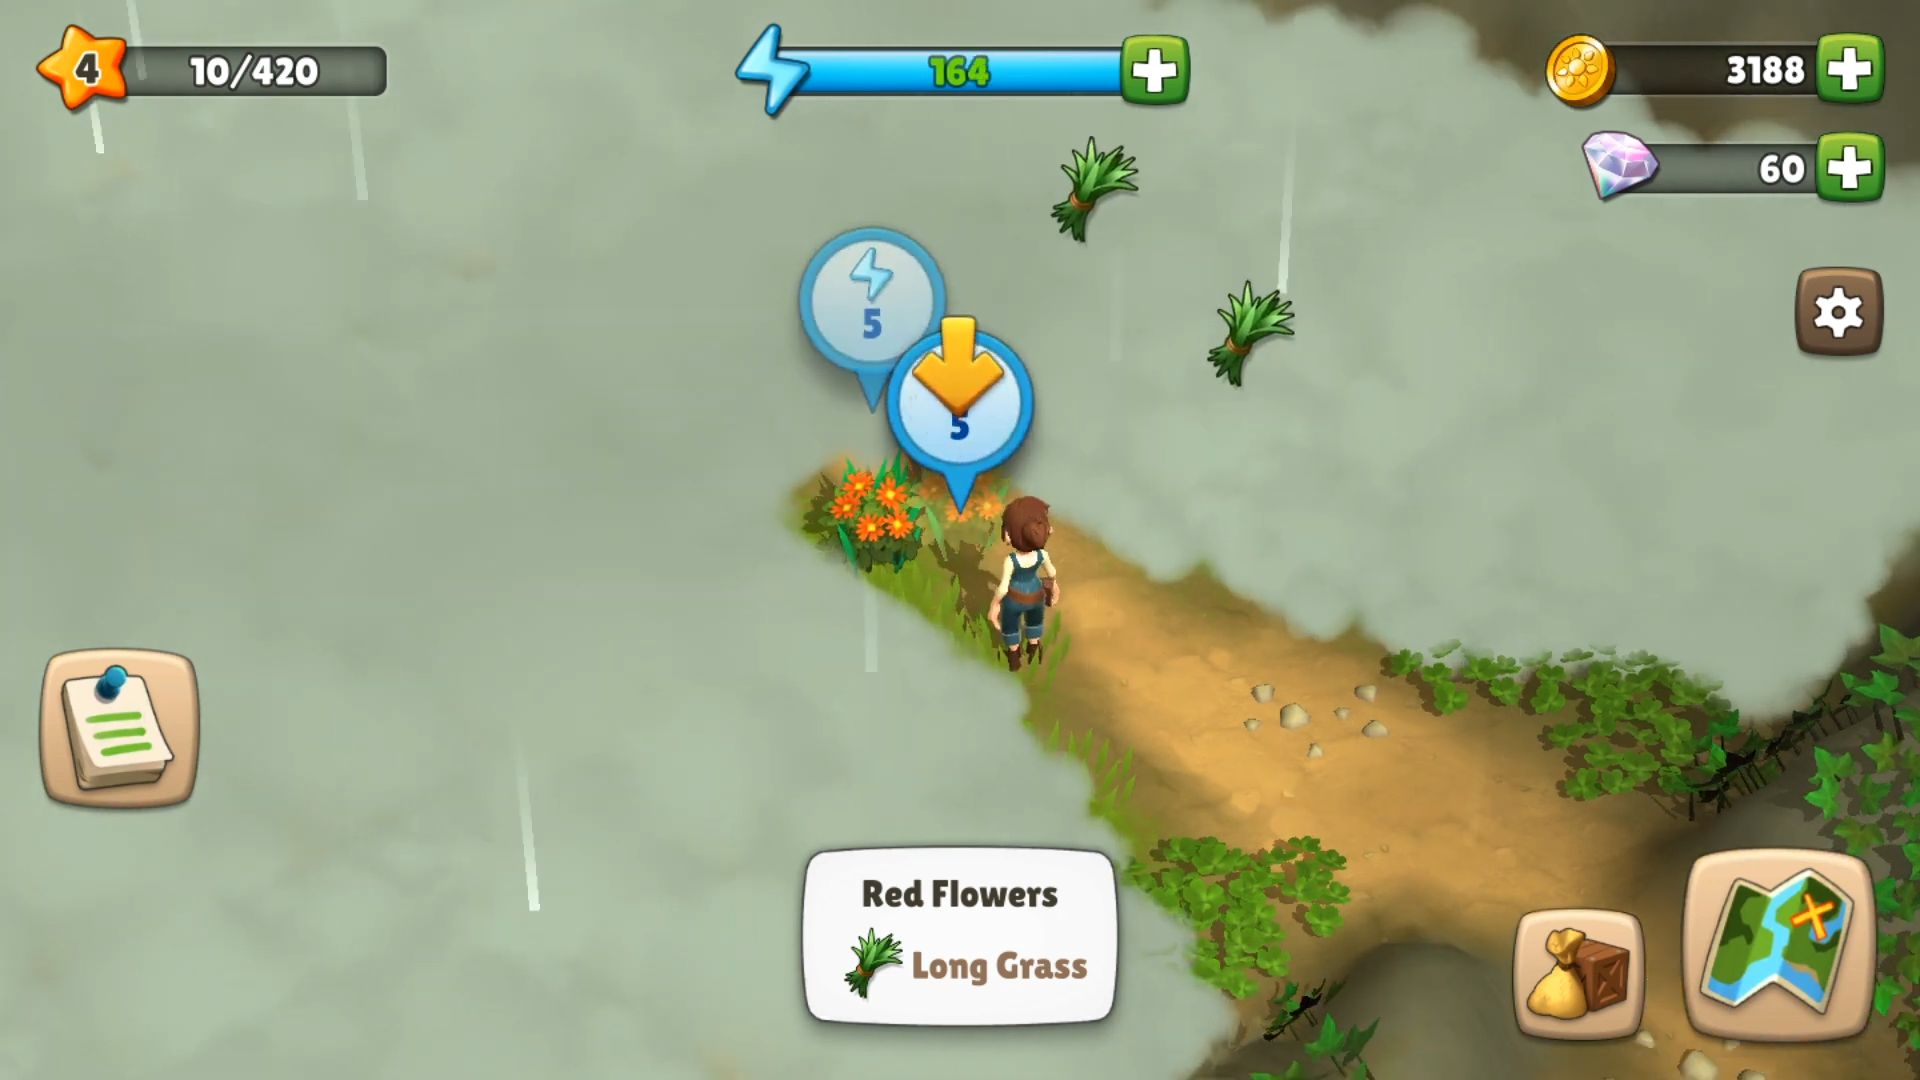 Sunrise Village - Android game screenshots.